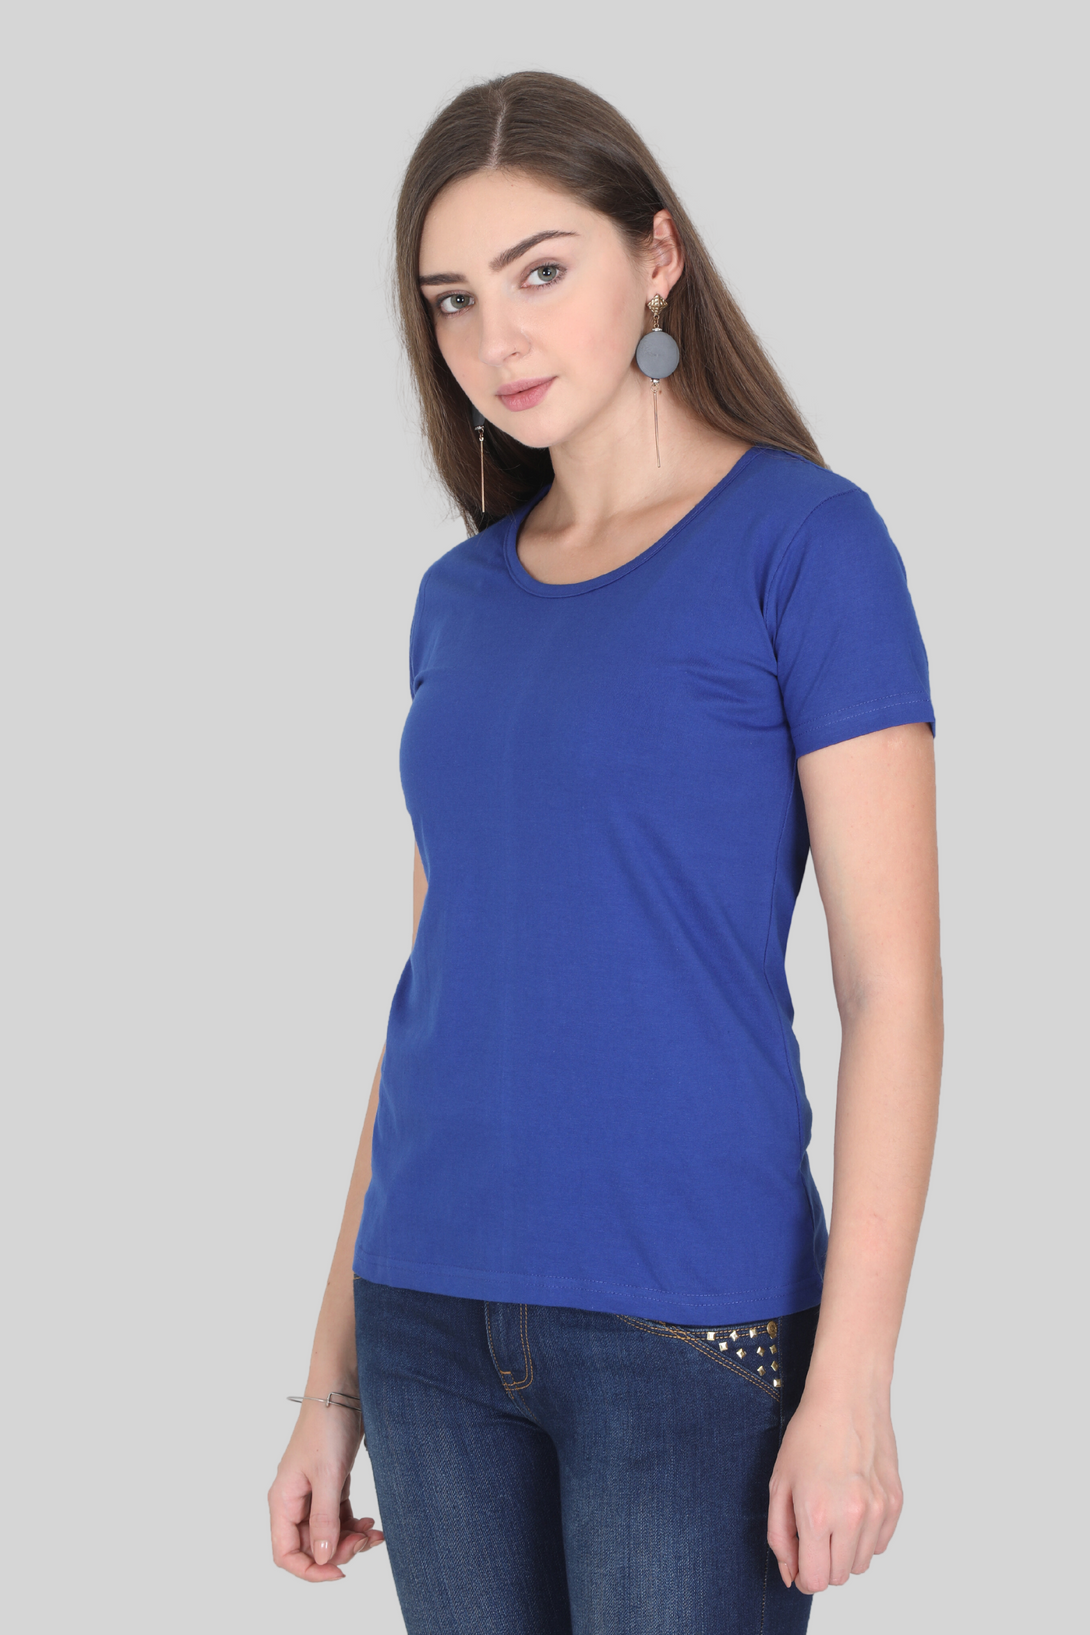 Royal Blue Scoop Neck T-Shirt For Women - WowWaves